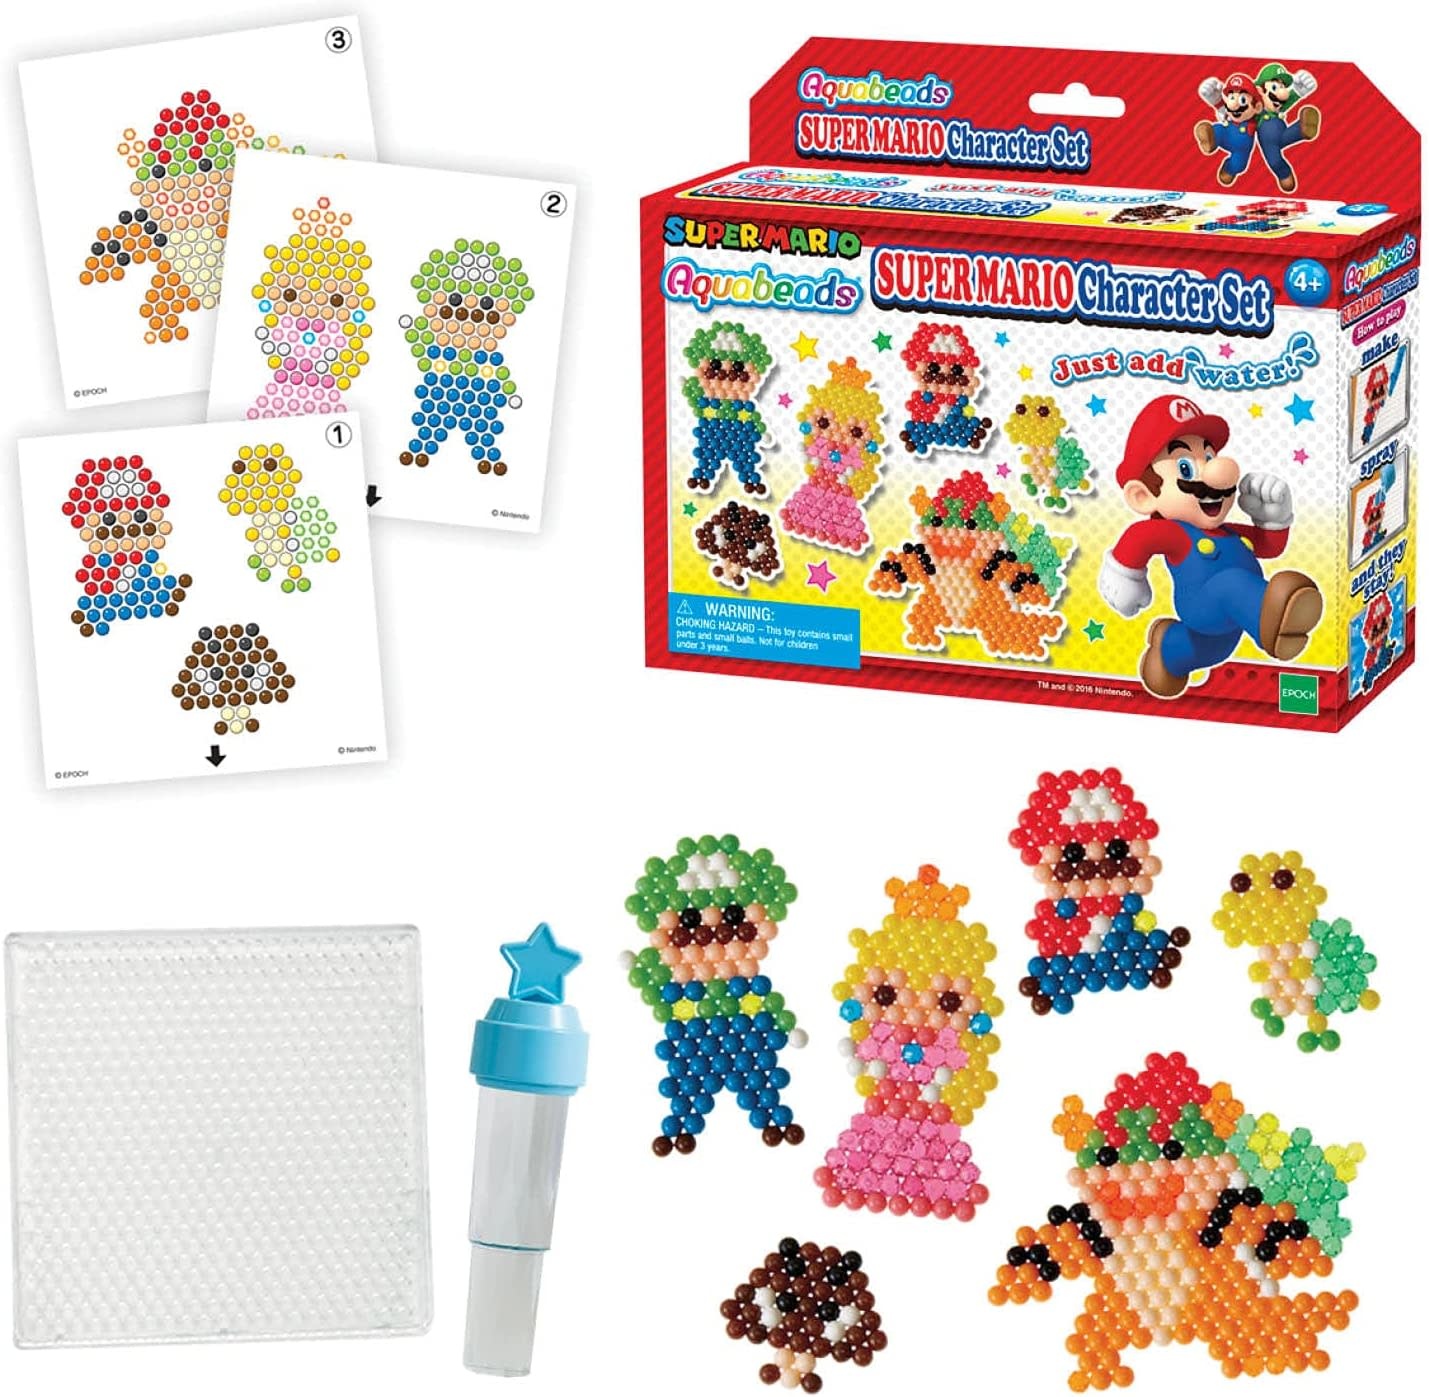 Aquabeads Super Mario Character Set Kit £11.99 @